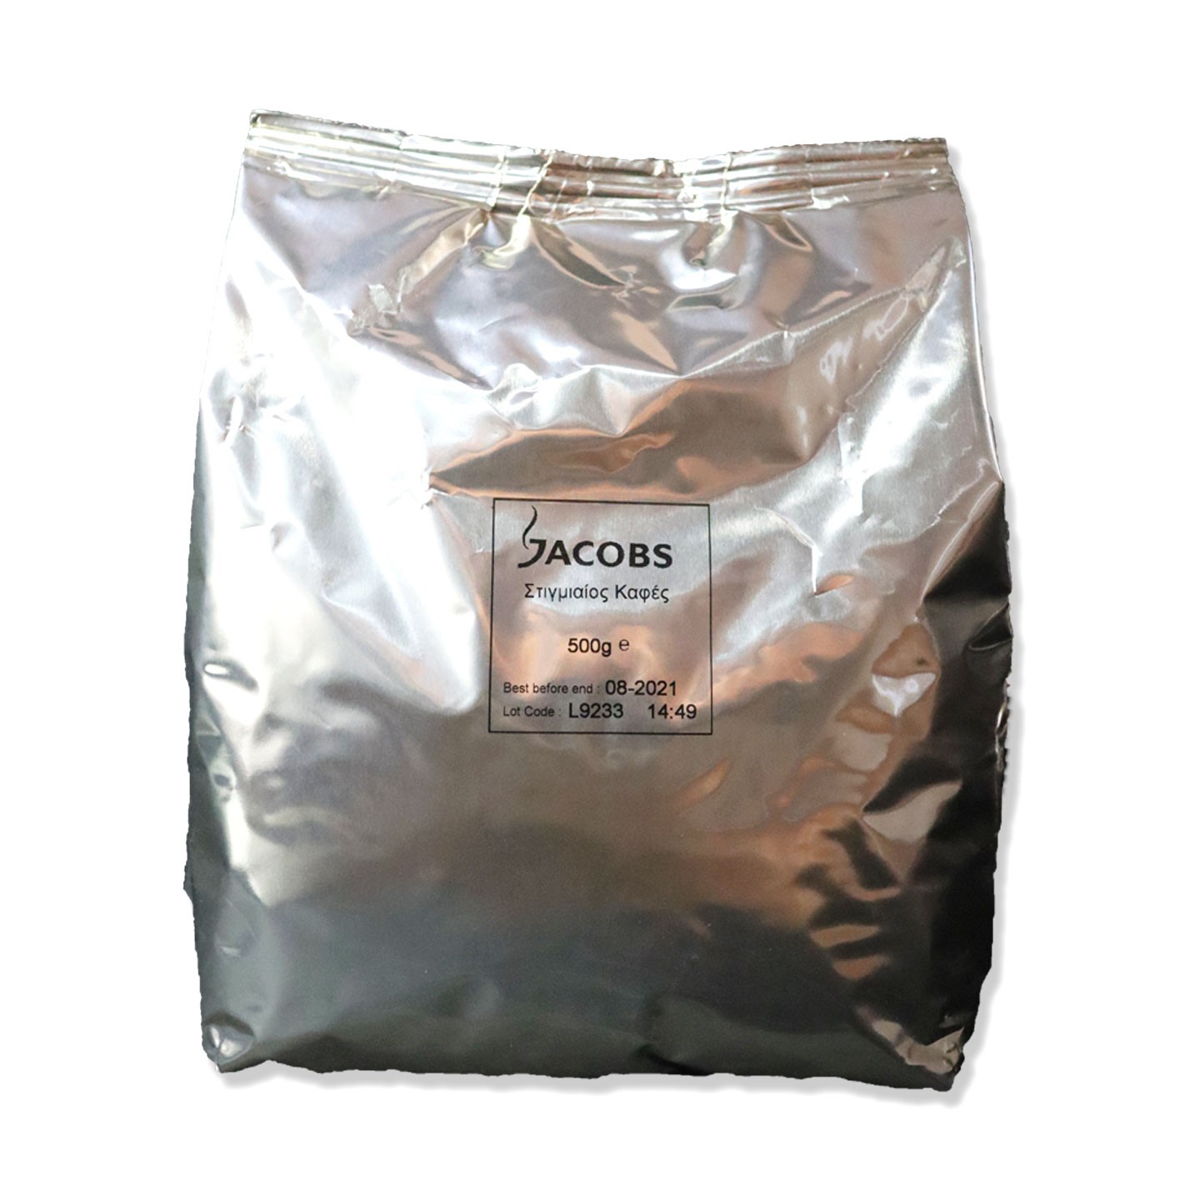 Jacobs Στιγμιαίος Καφές